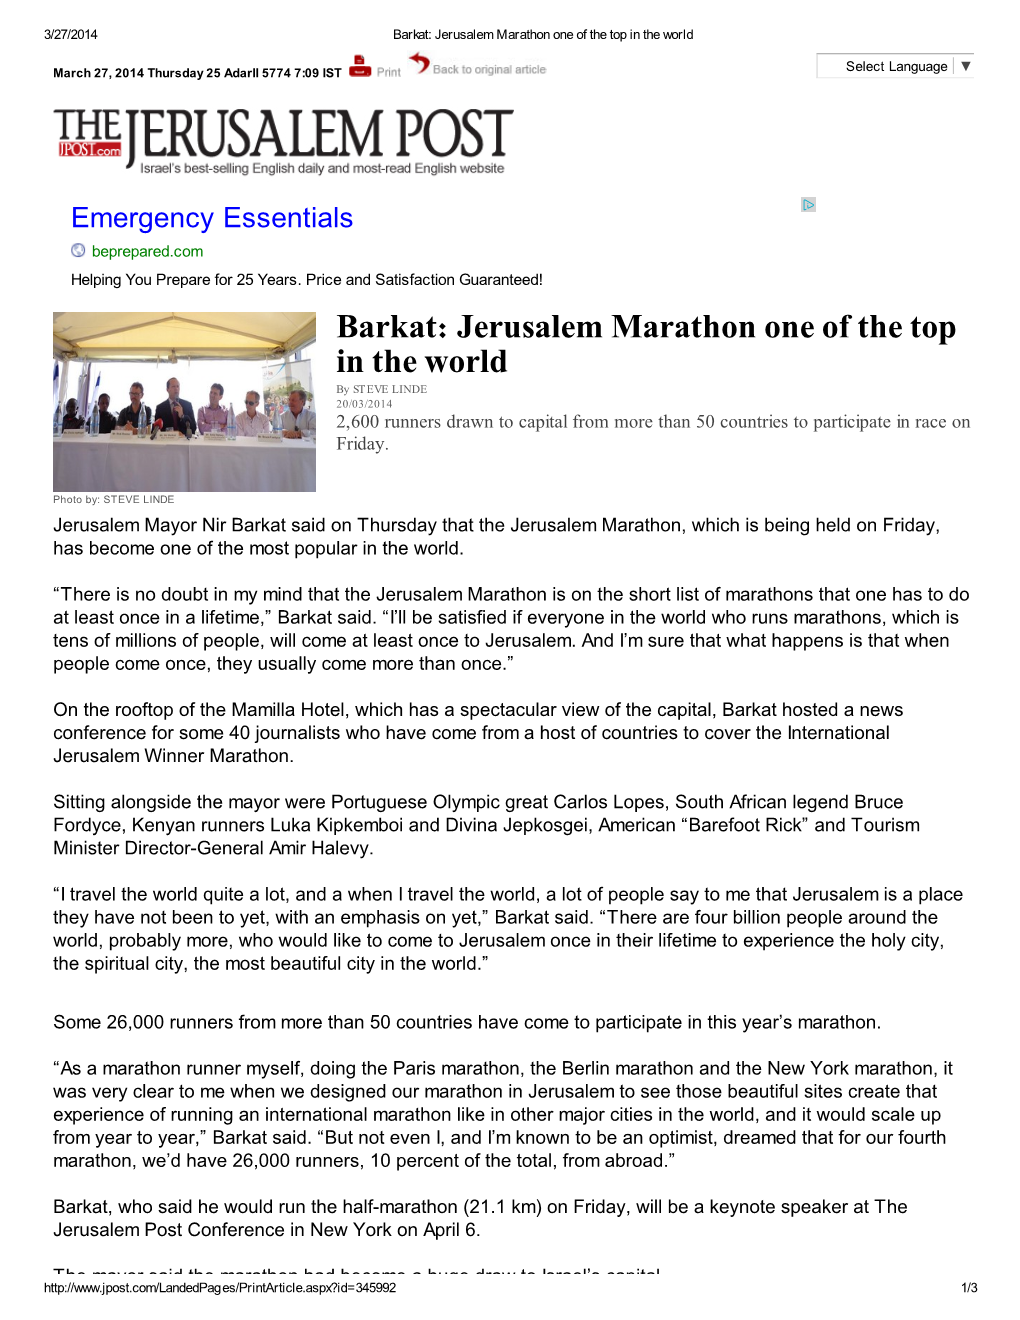 Barkat: Jerusalem Marathon One of the Top in the World